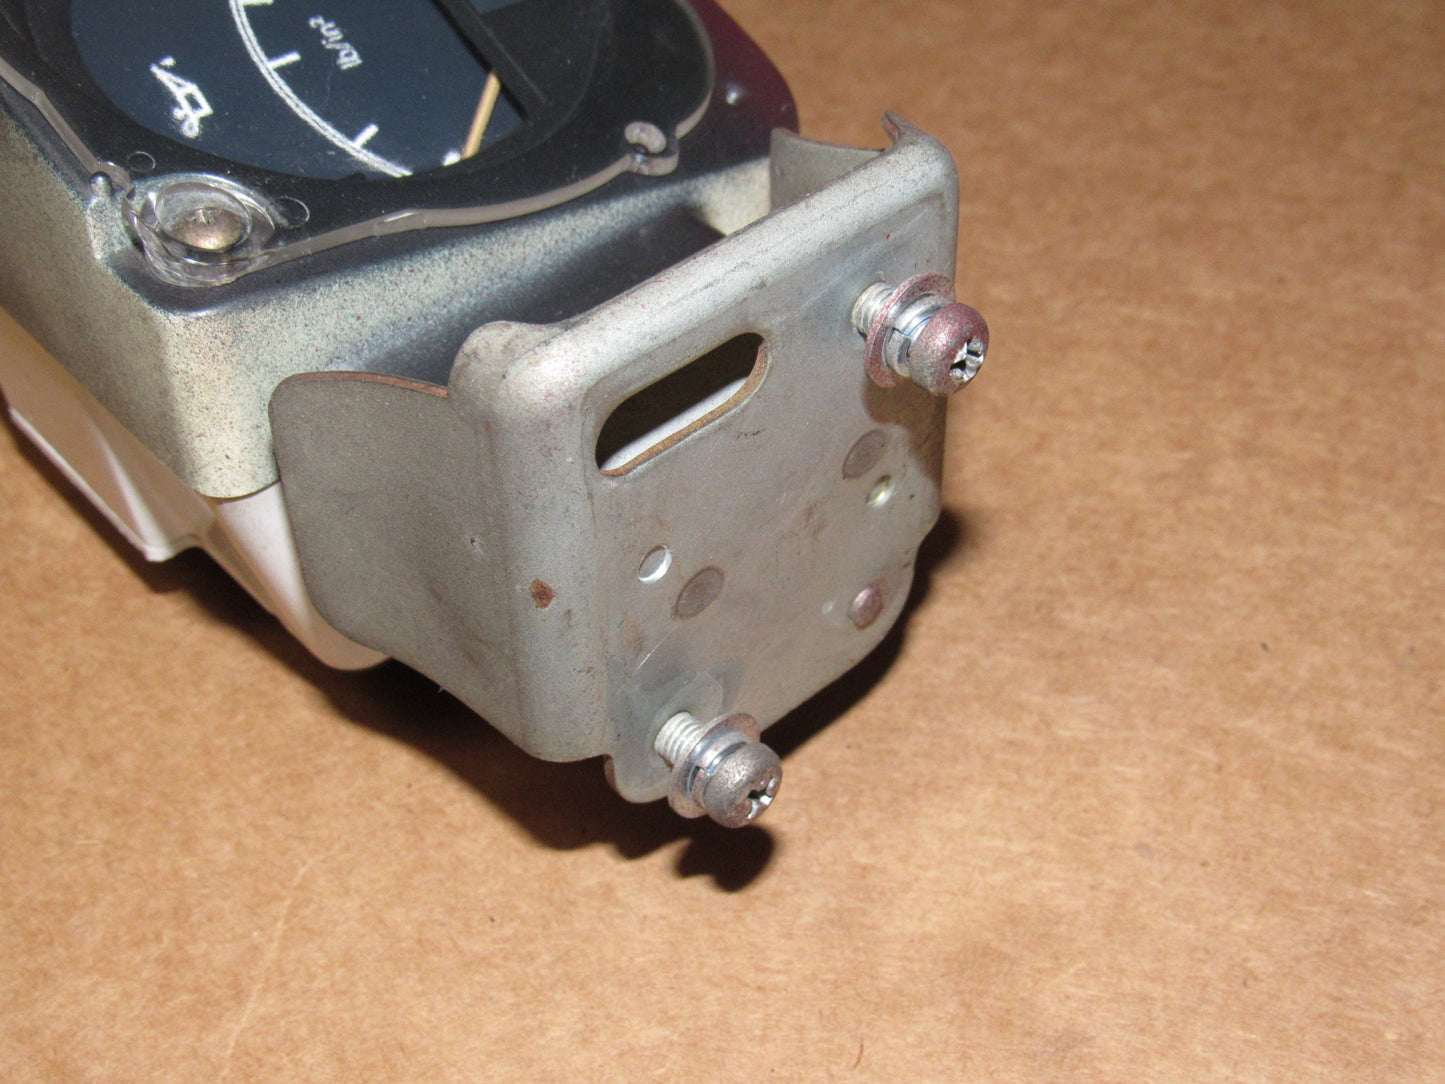 79 80 Datsun 280zx OEM Oil Volts Analog Clock Gauge Meter